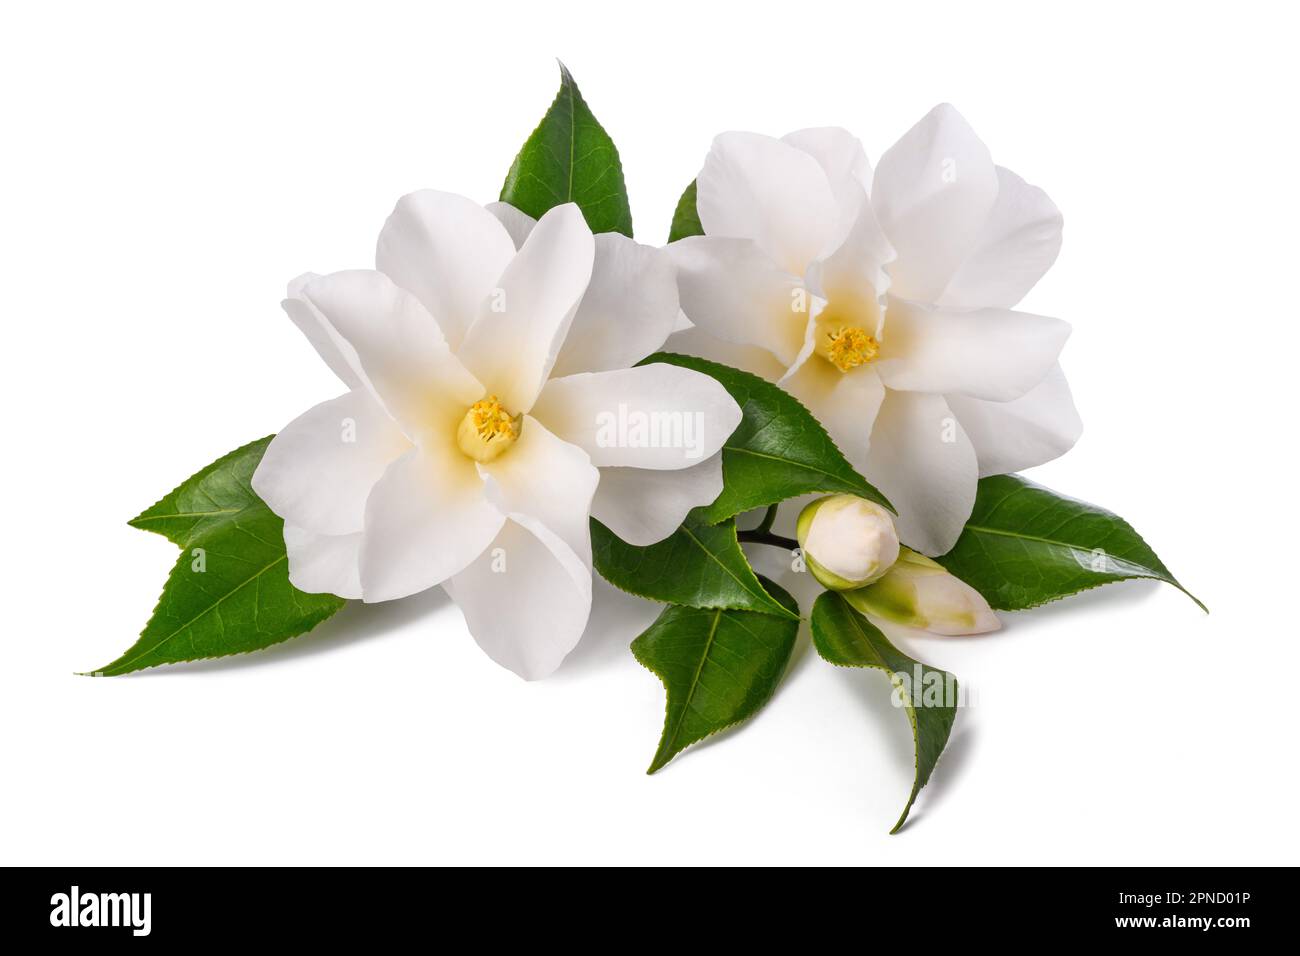 White camellia flowers isolated on white background Stock Photo